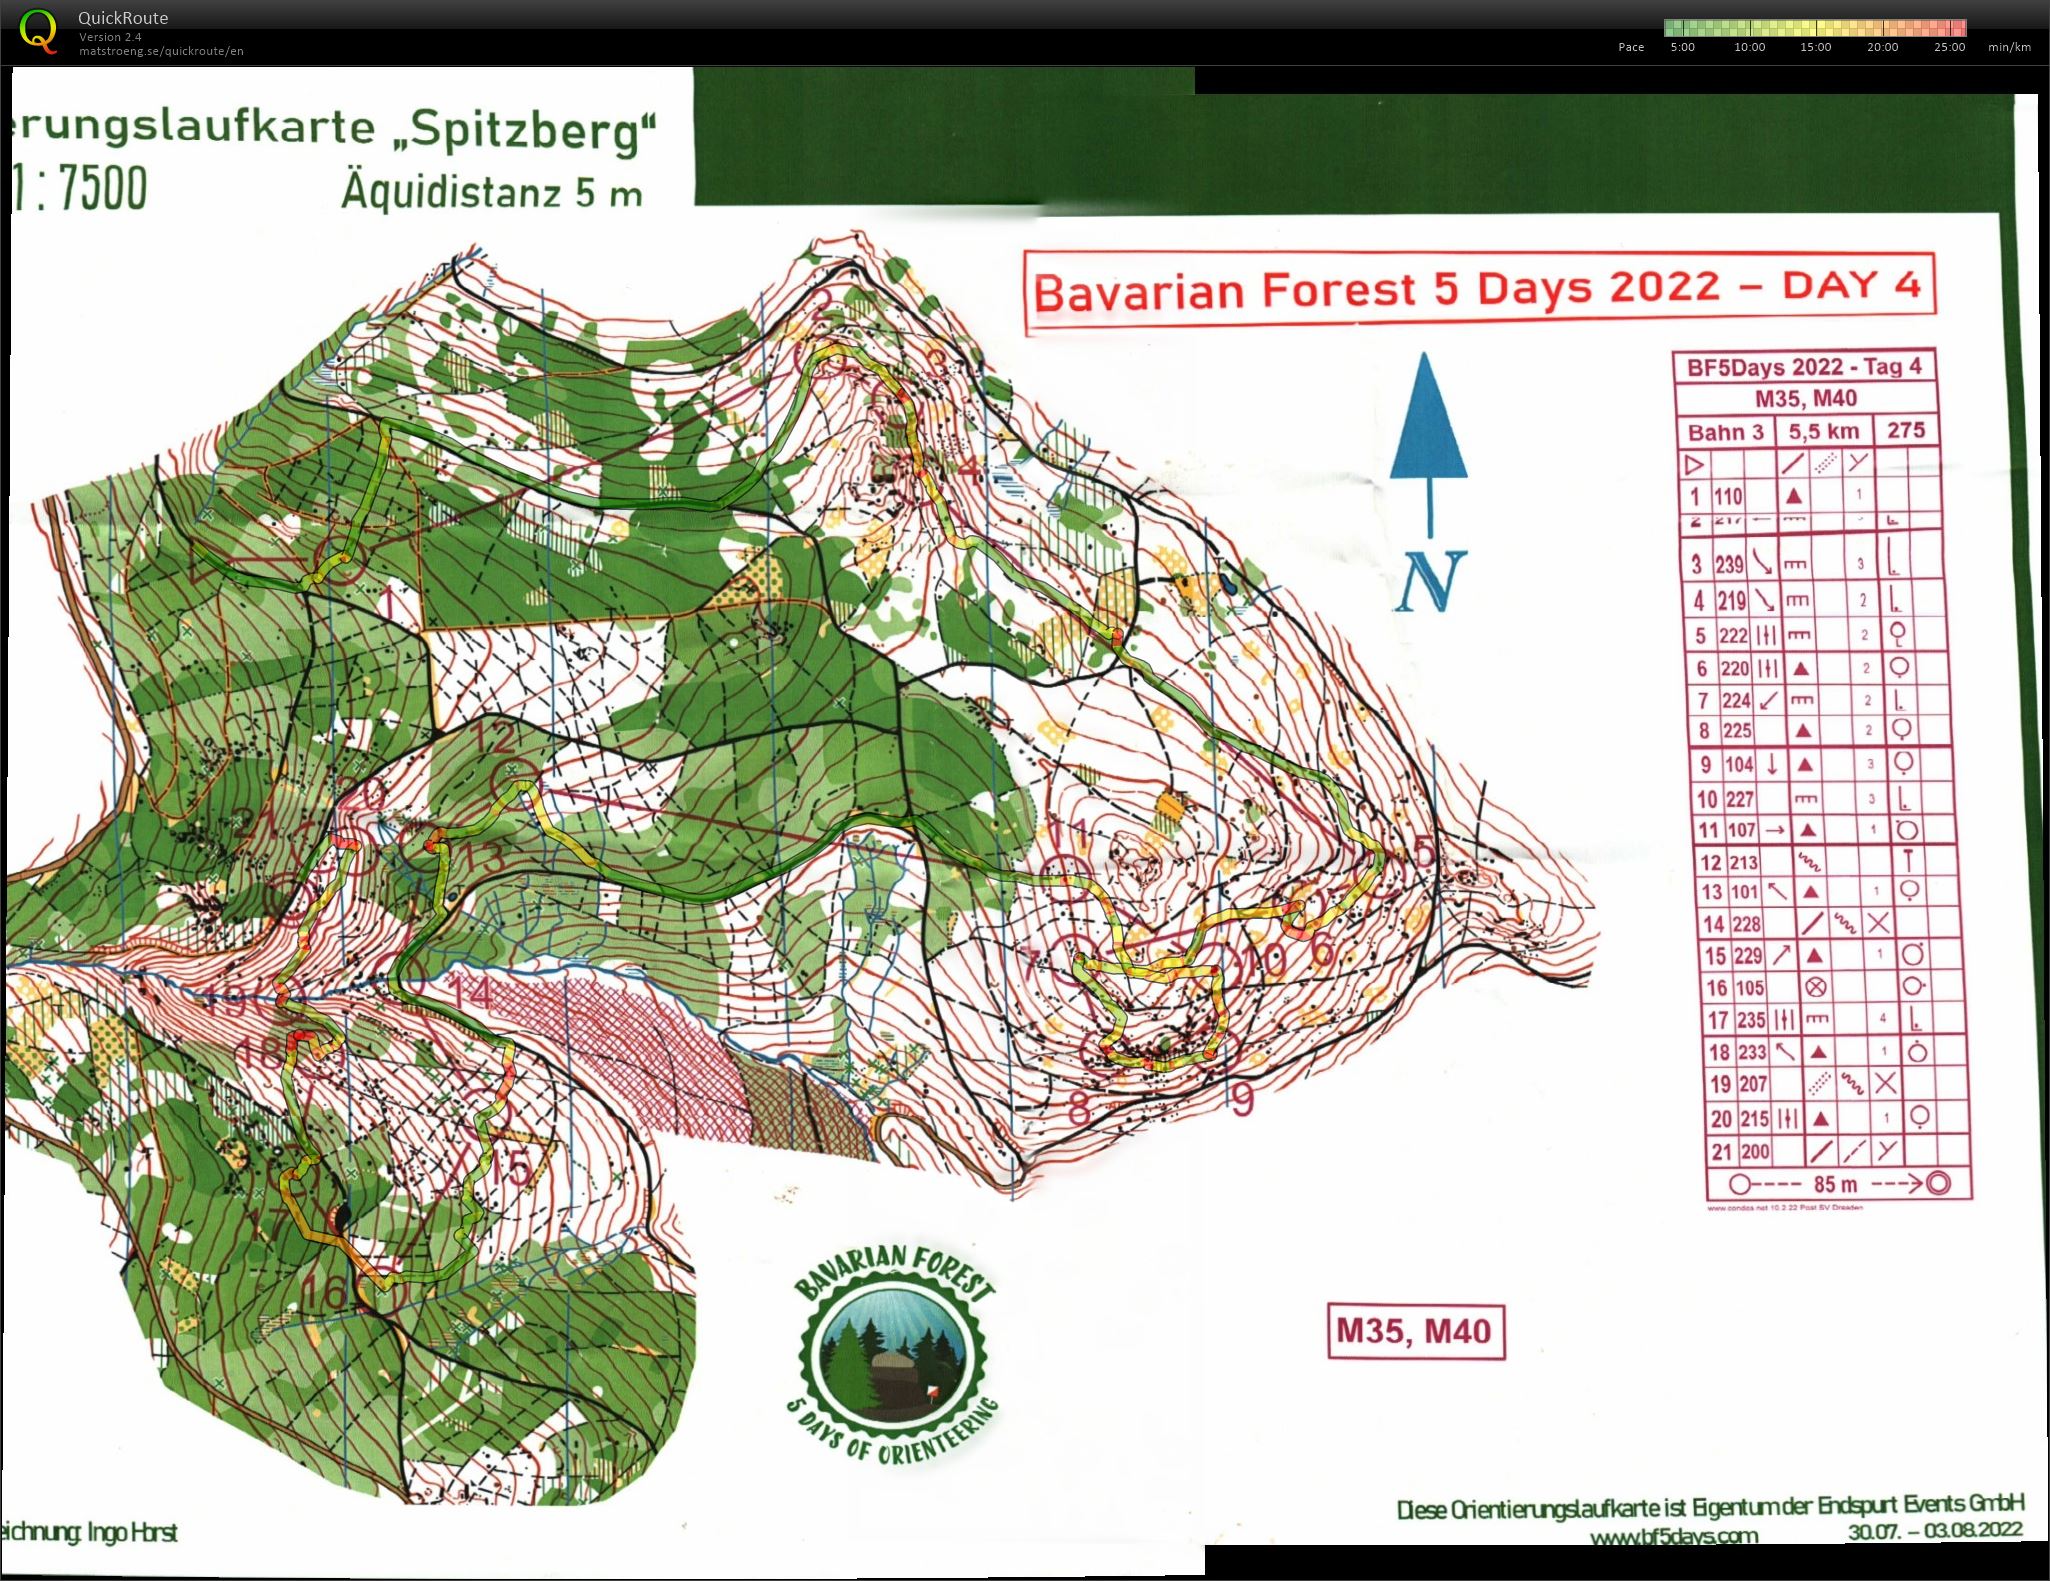 Bavarian Forest 5 Days - Day 4 (02.08.2022)